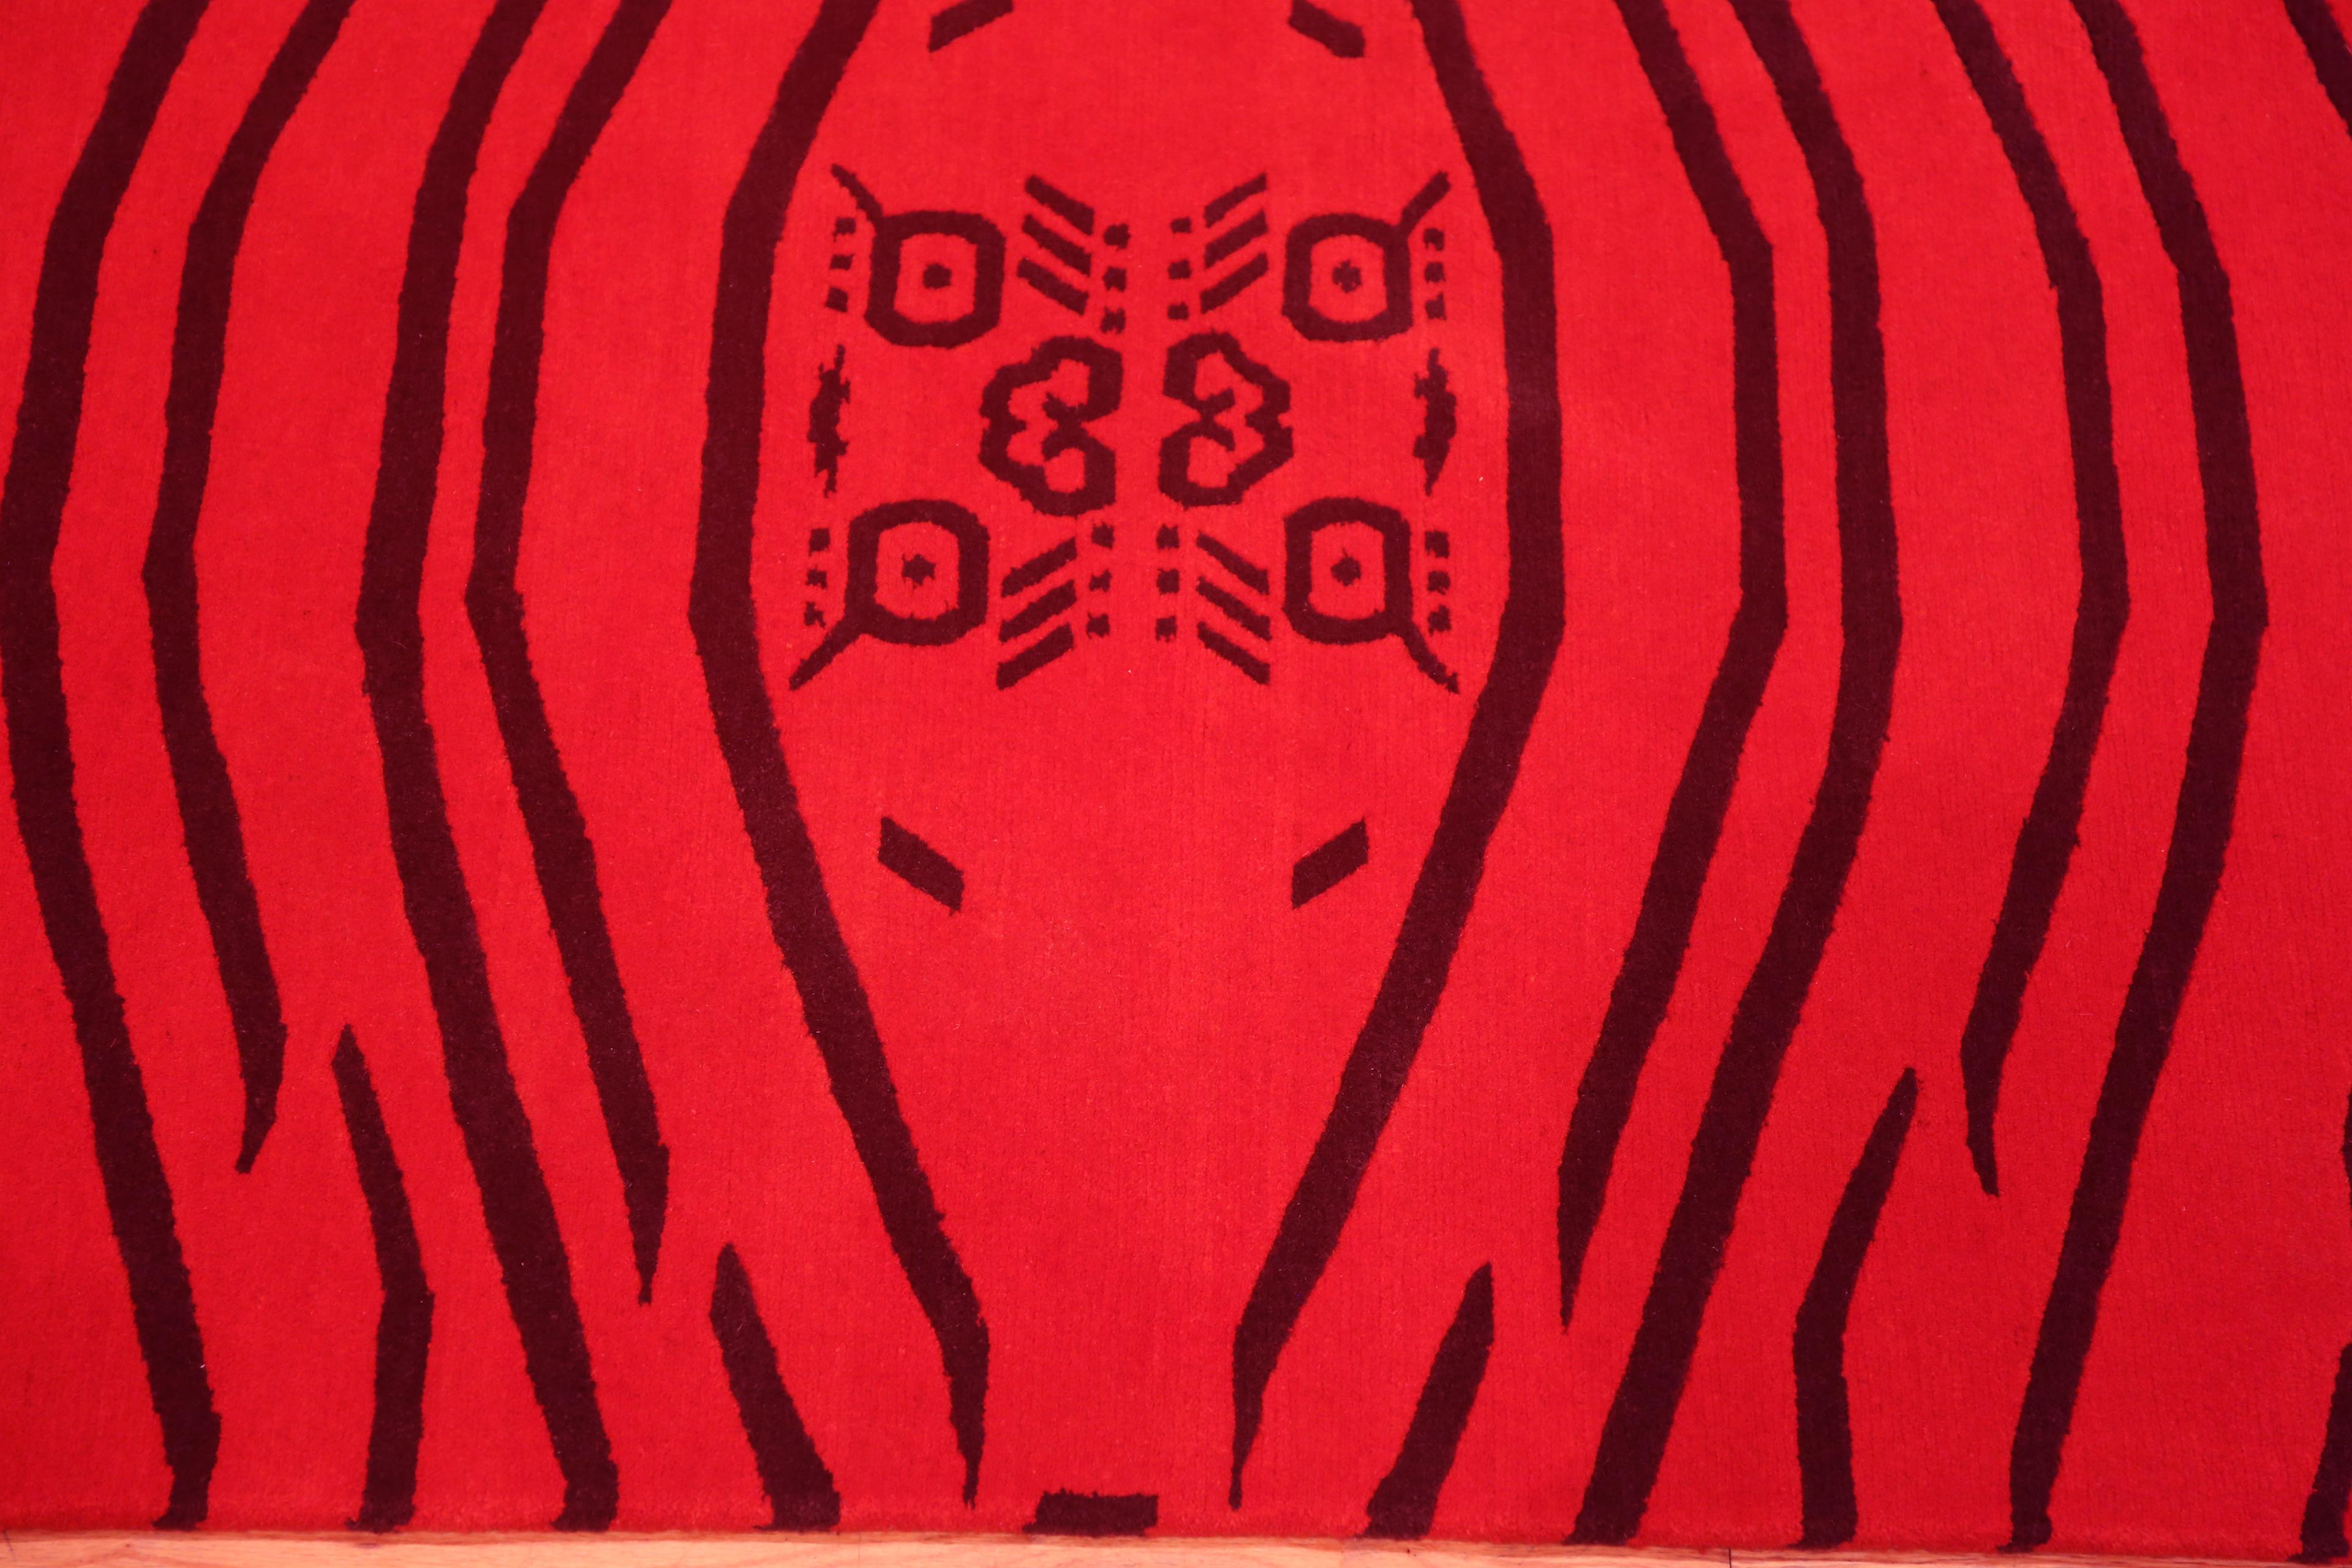 Artistic Red and Black Color Modern Tiger Design Hallway Runner Rug, Herkunftsland: Nepal, Entstehungszeit: Modern Rugs